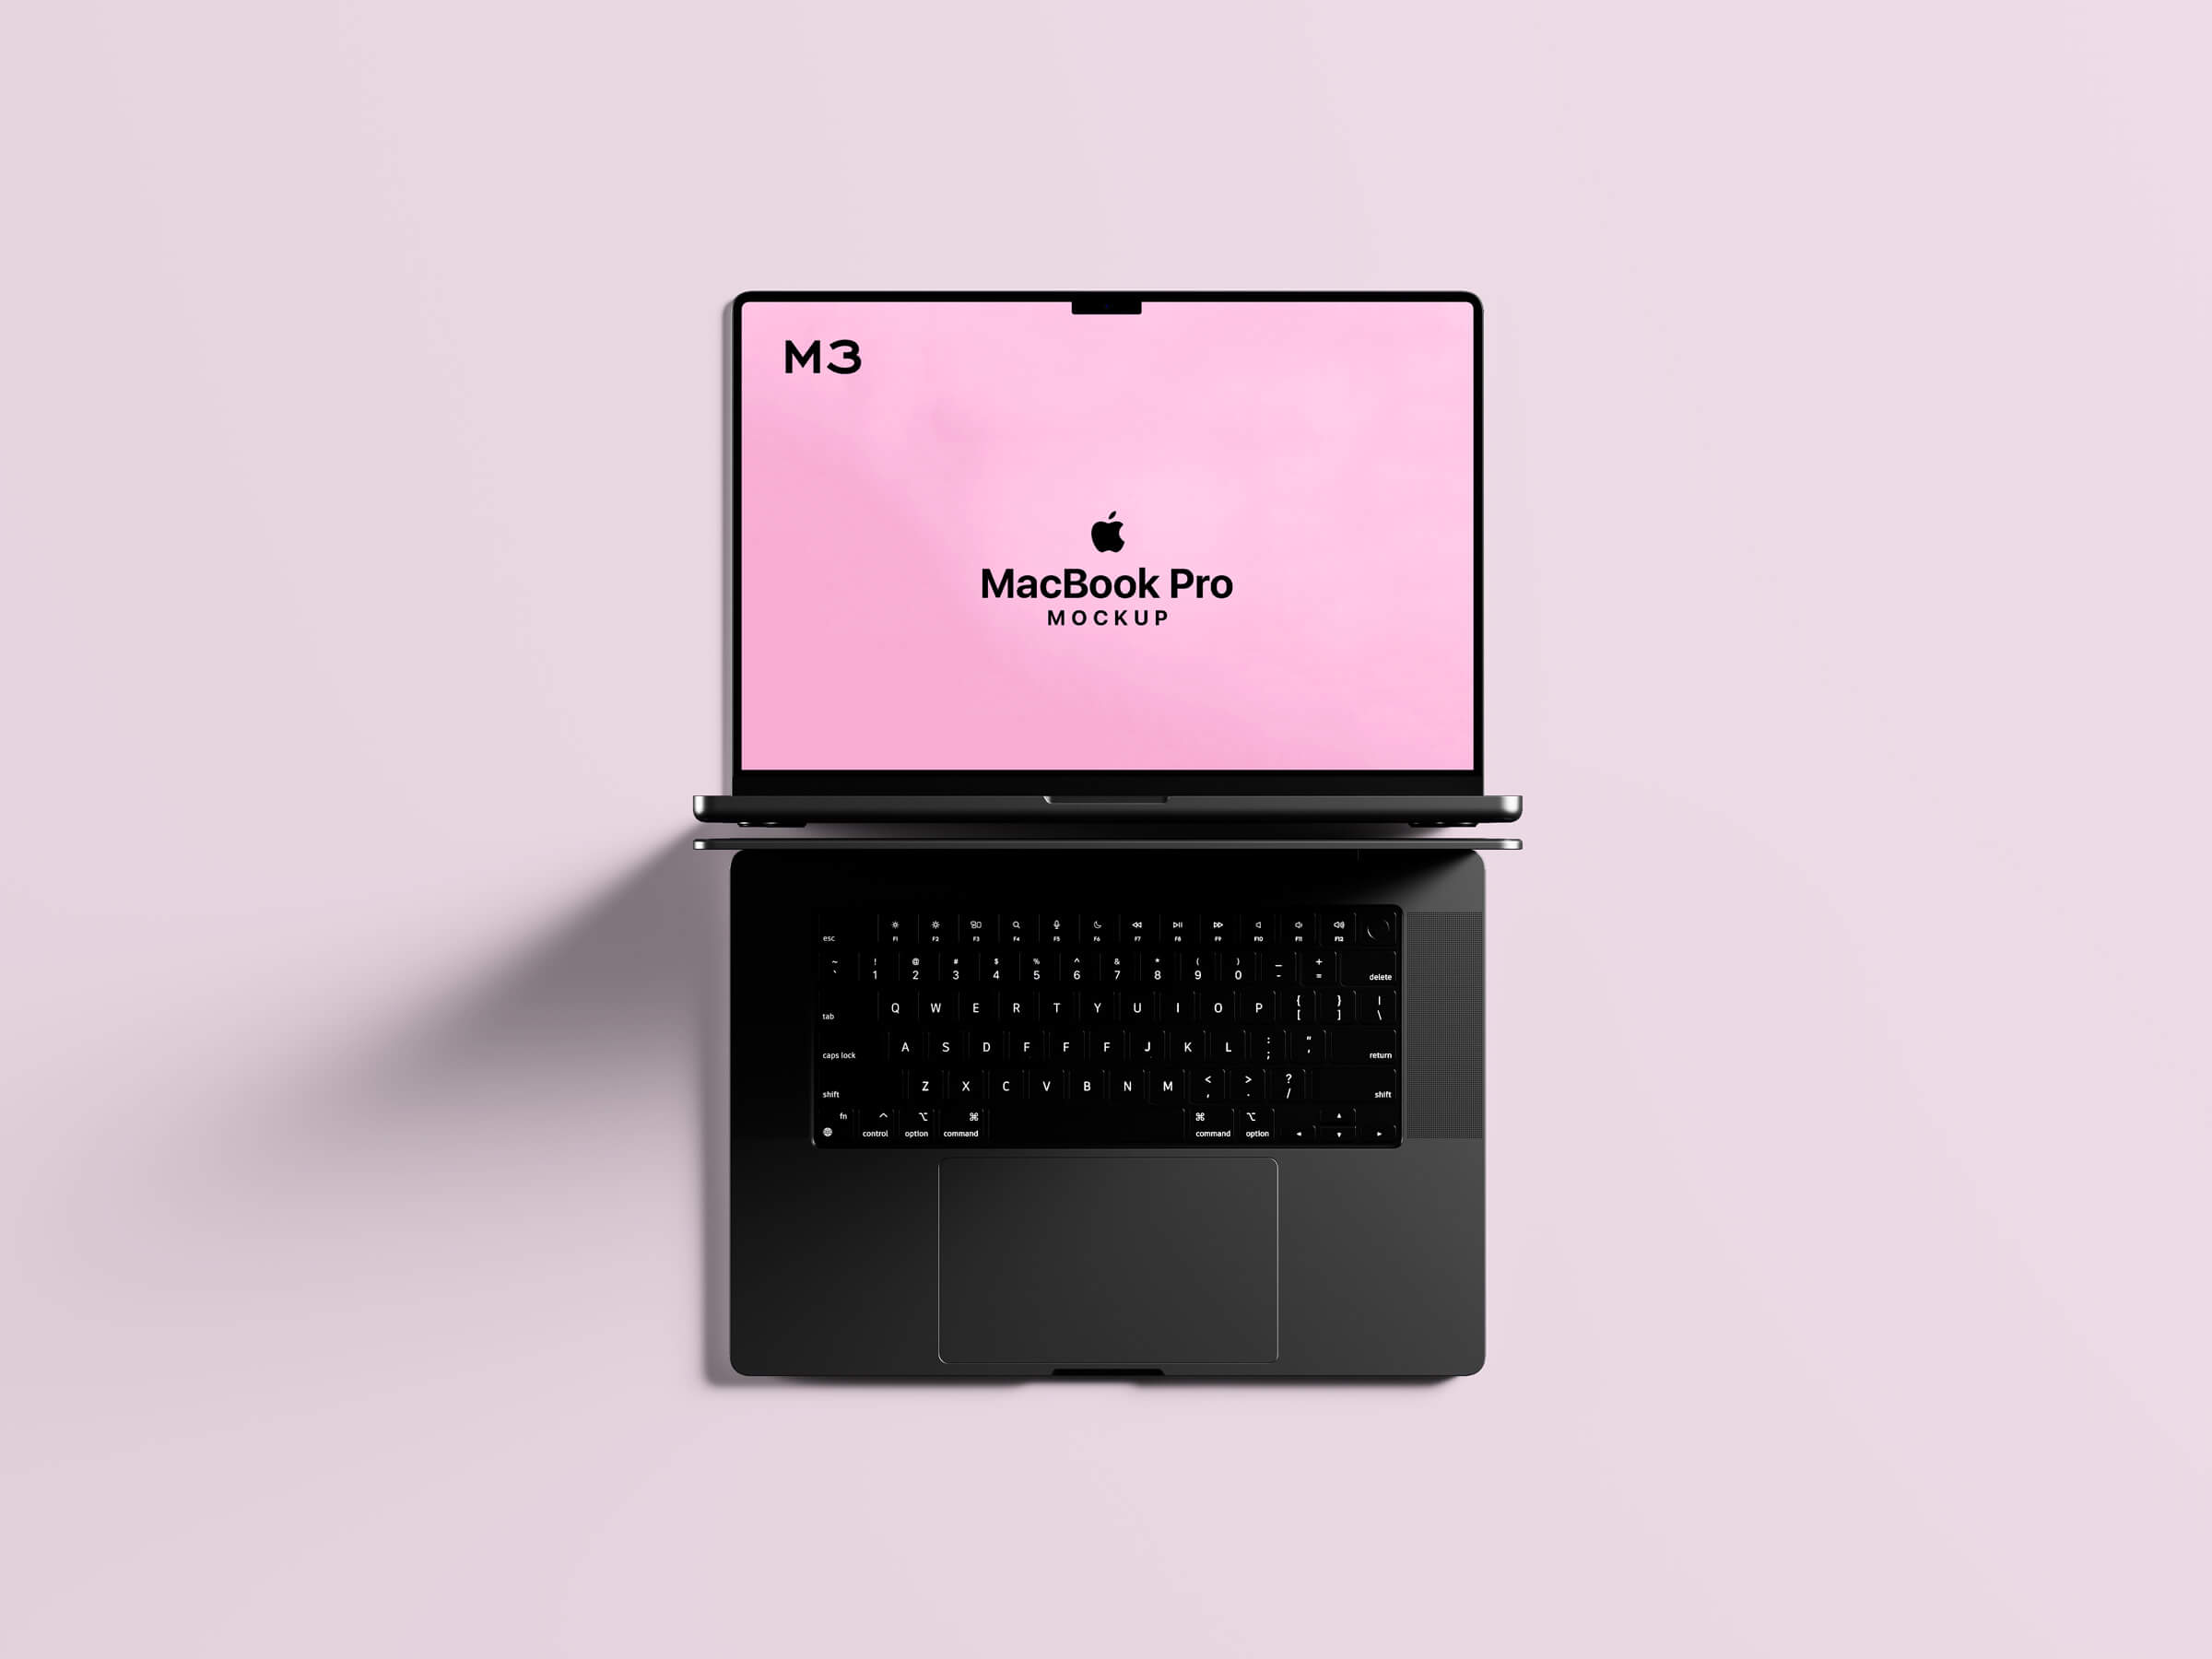 Free M3 MacBook Pro Mockup PSD